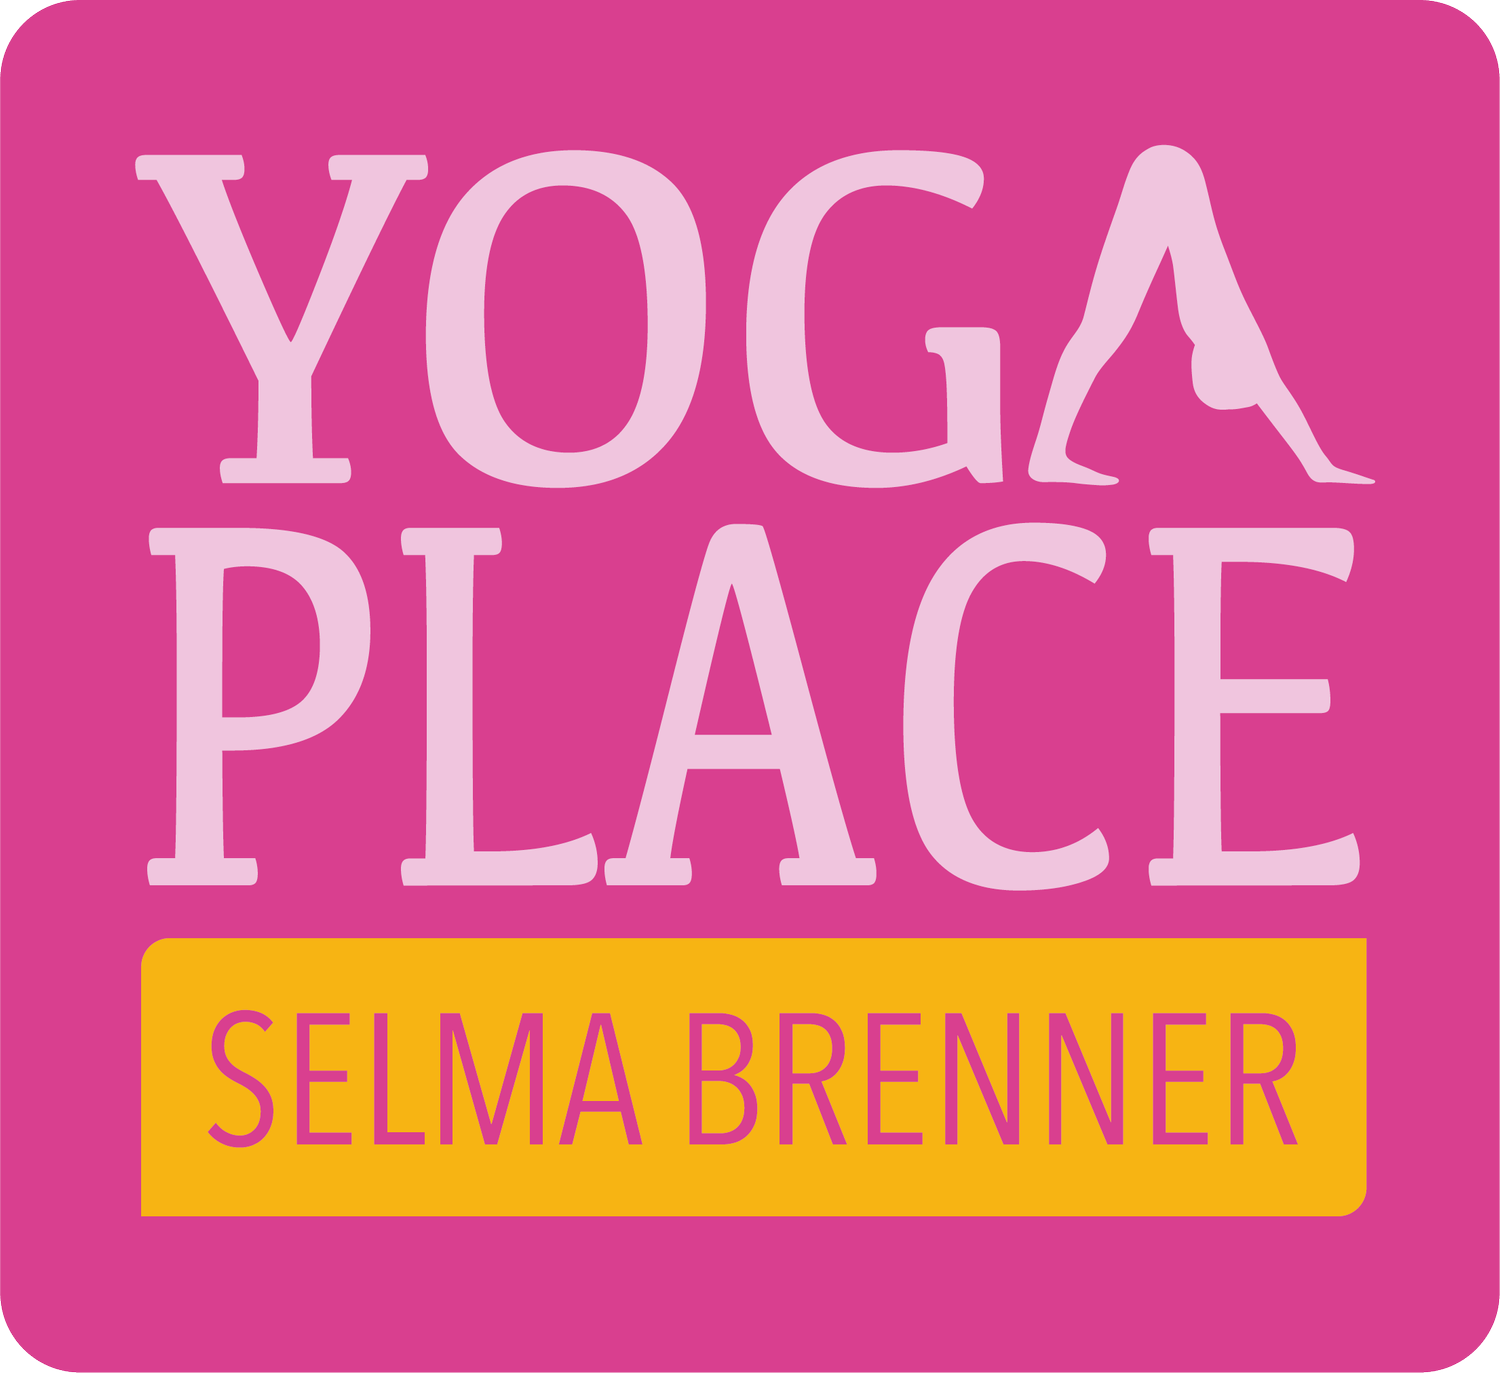 Selma Brenner | Yoga Place Akademie